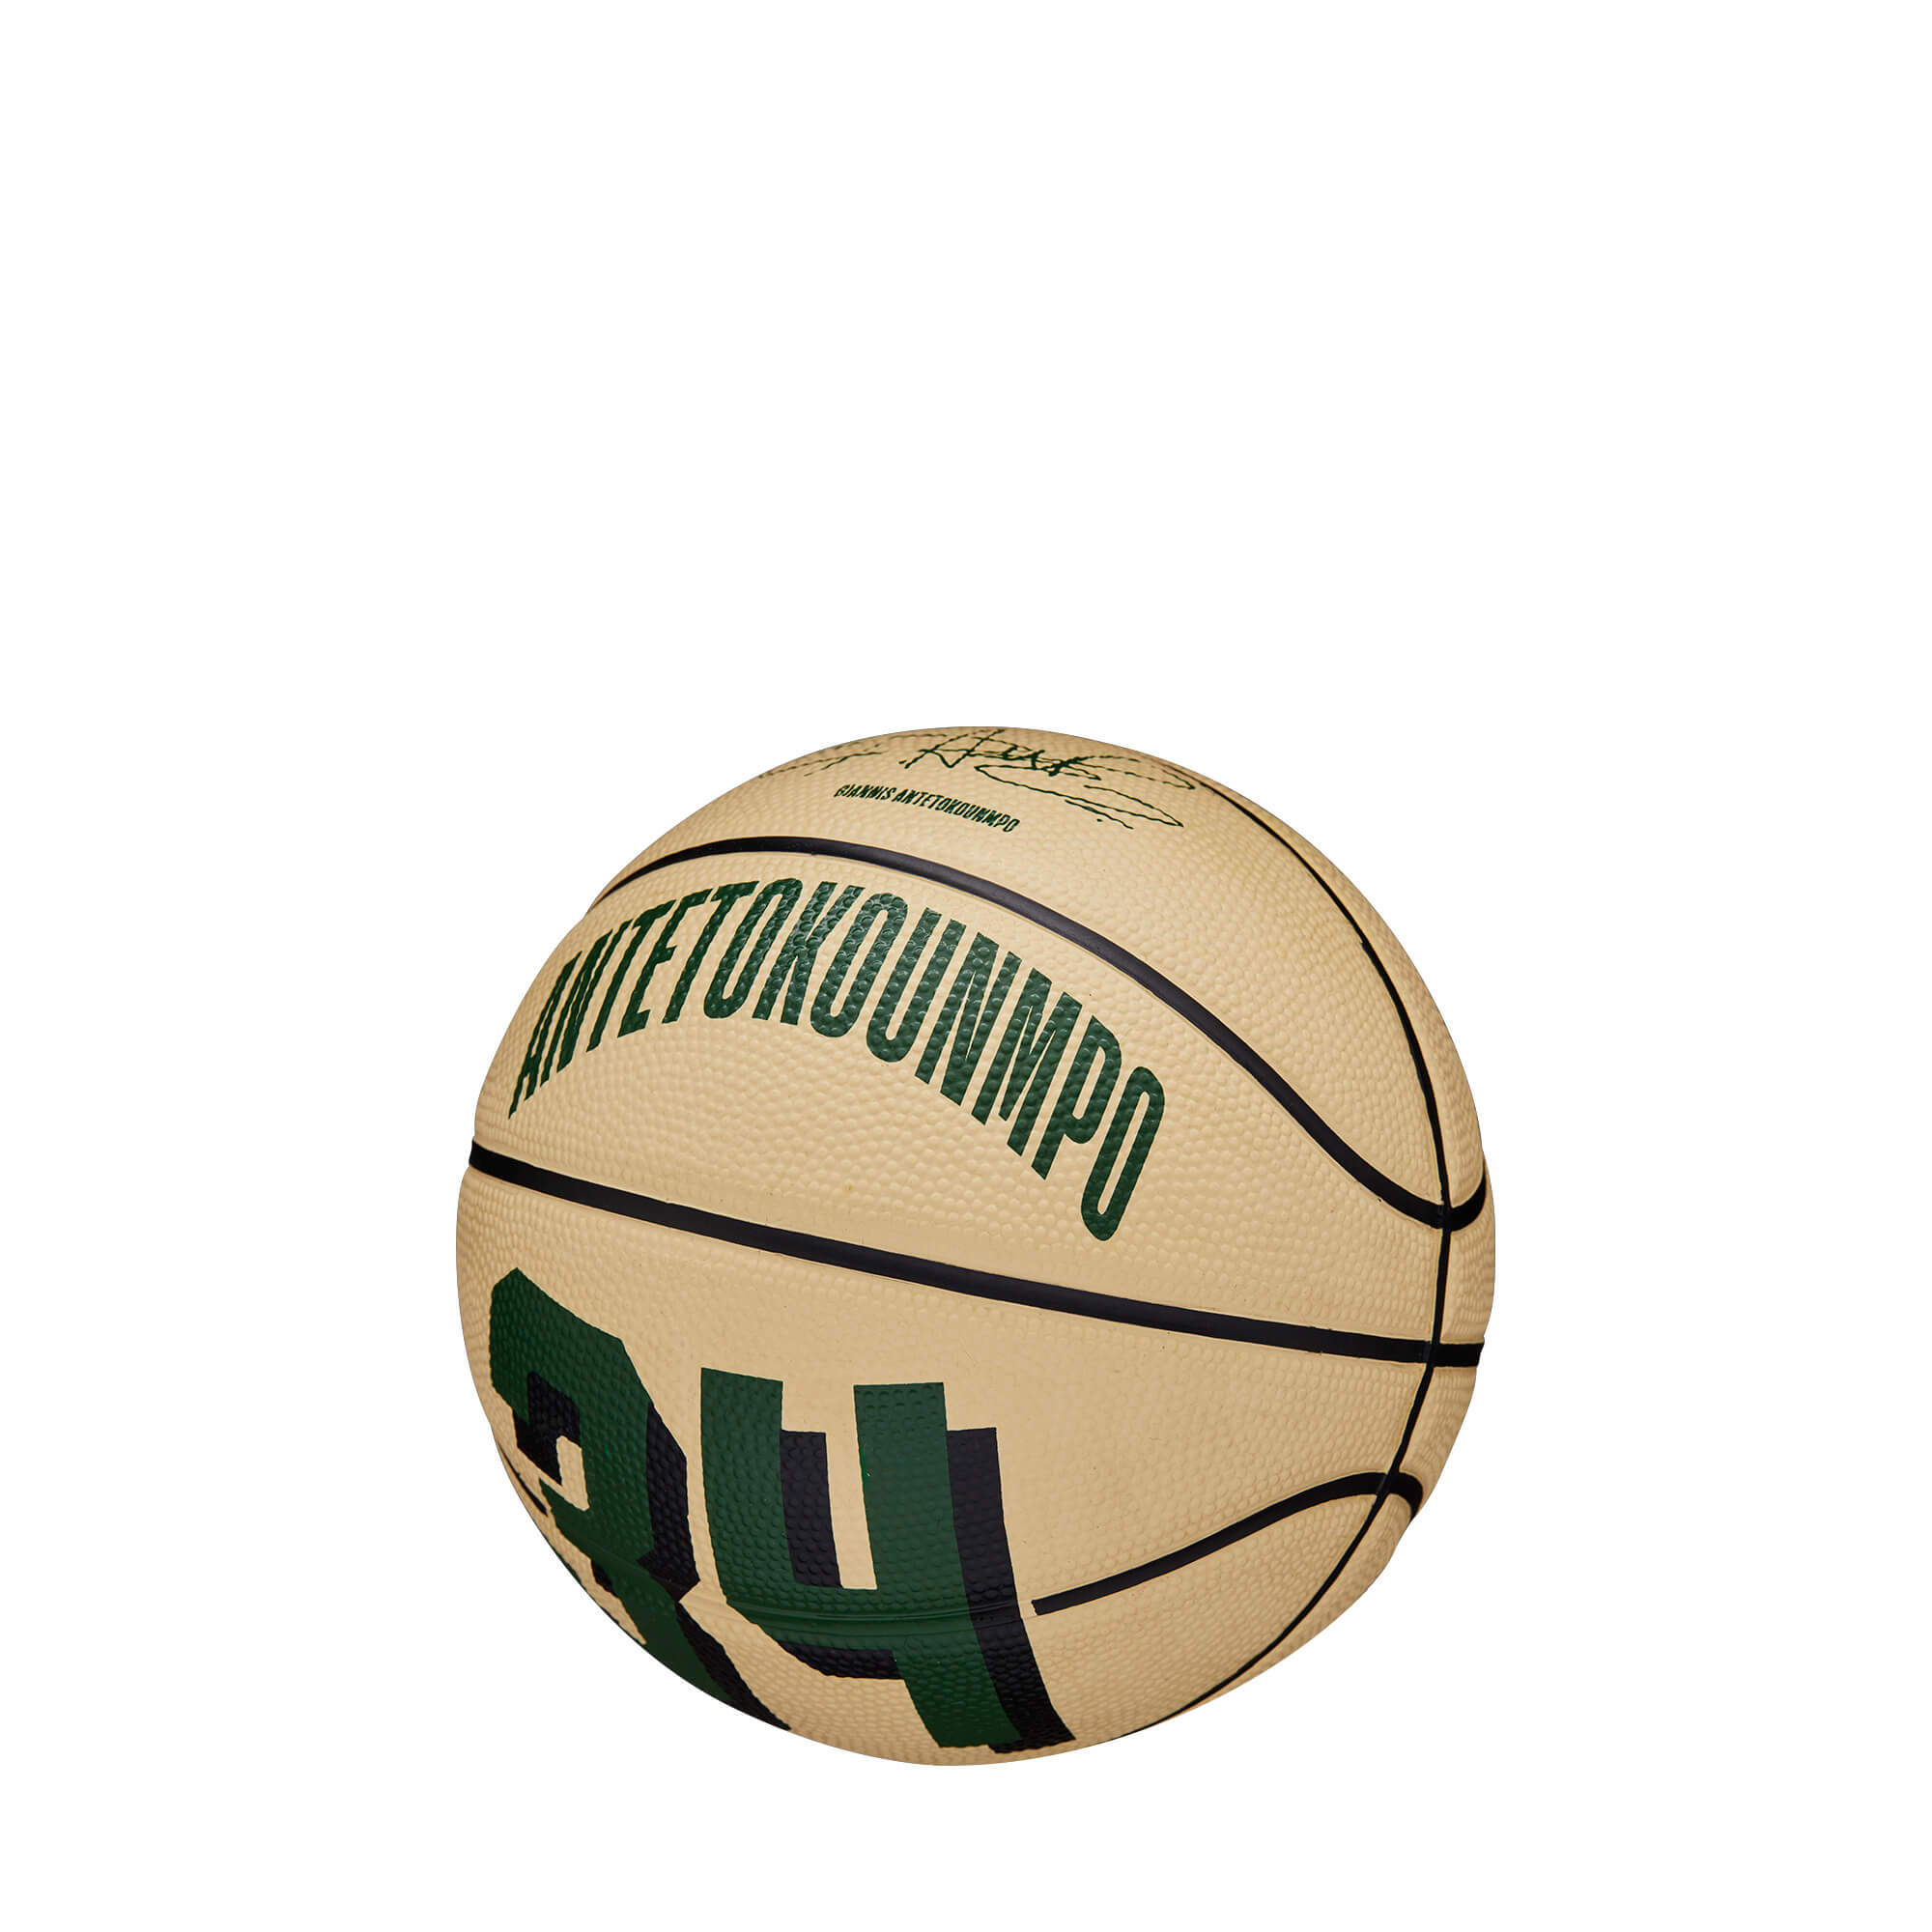 Ballons de basket NBA Player Mini Giannis Antetokounmpo